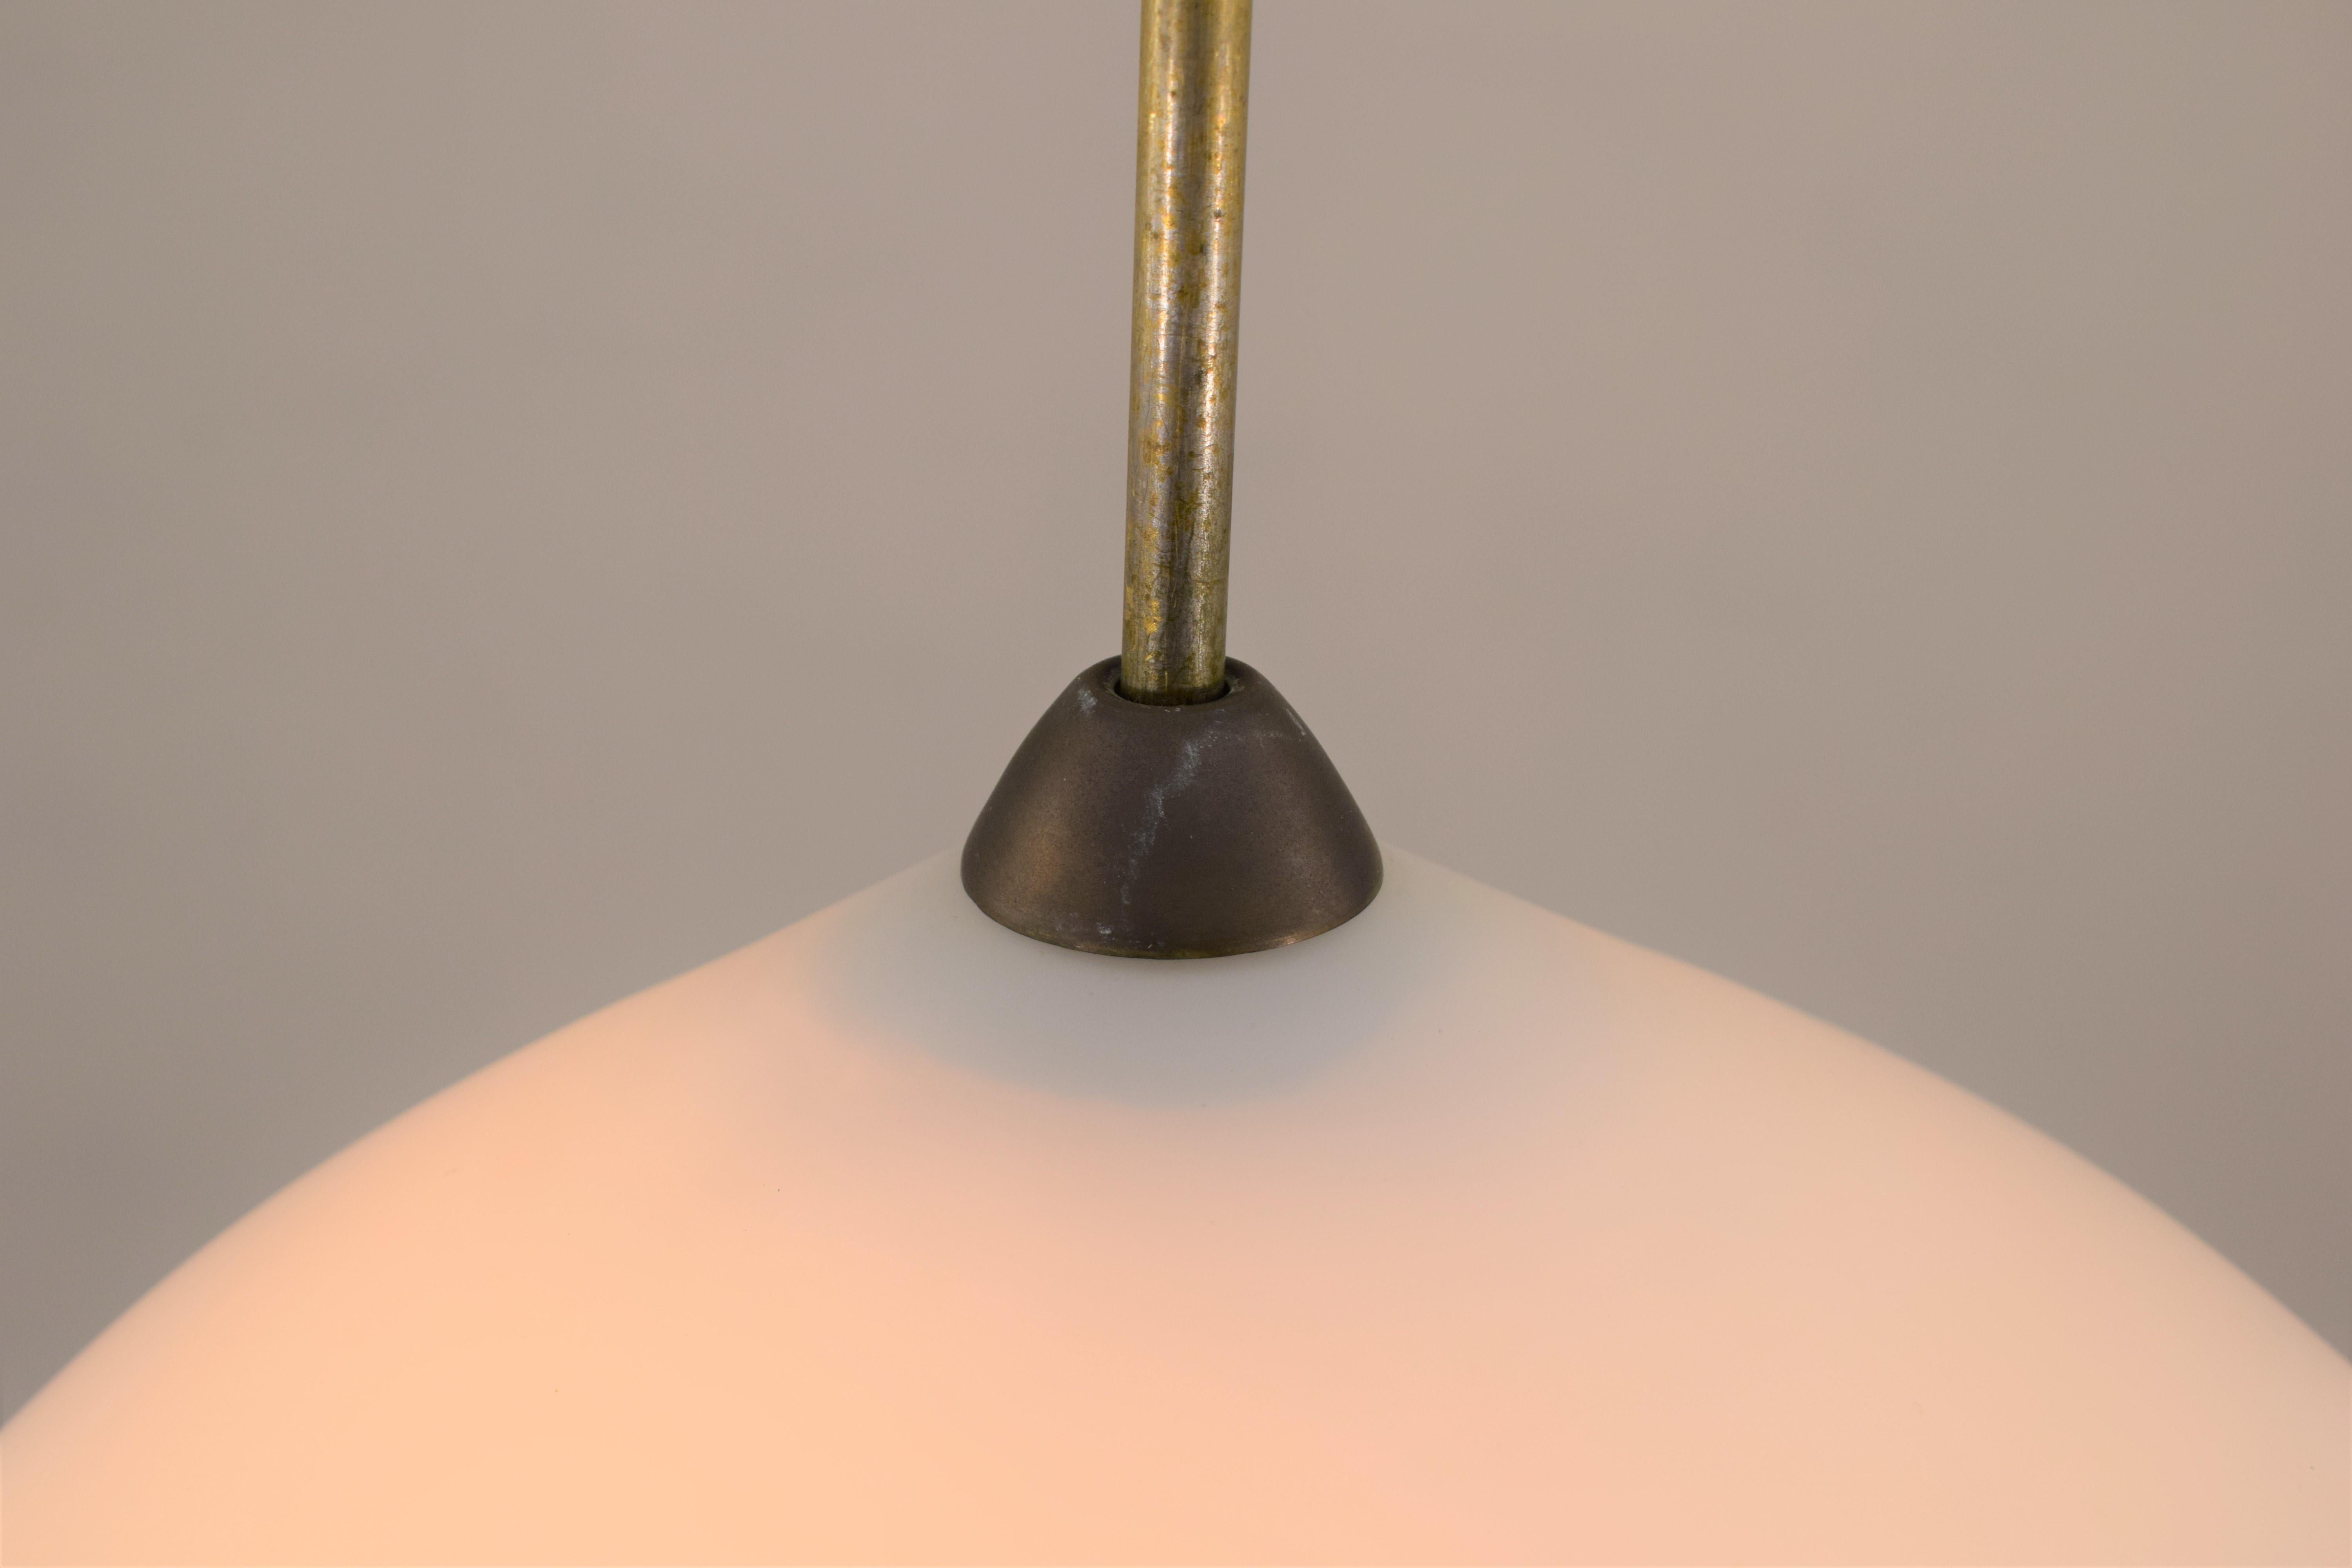 Stilnovo attributed ceiling pendant, 1950s.
Dimensions: H= 145 cm; D= 35 cm; H glass = 35 cm.